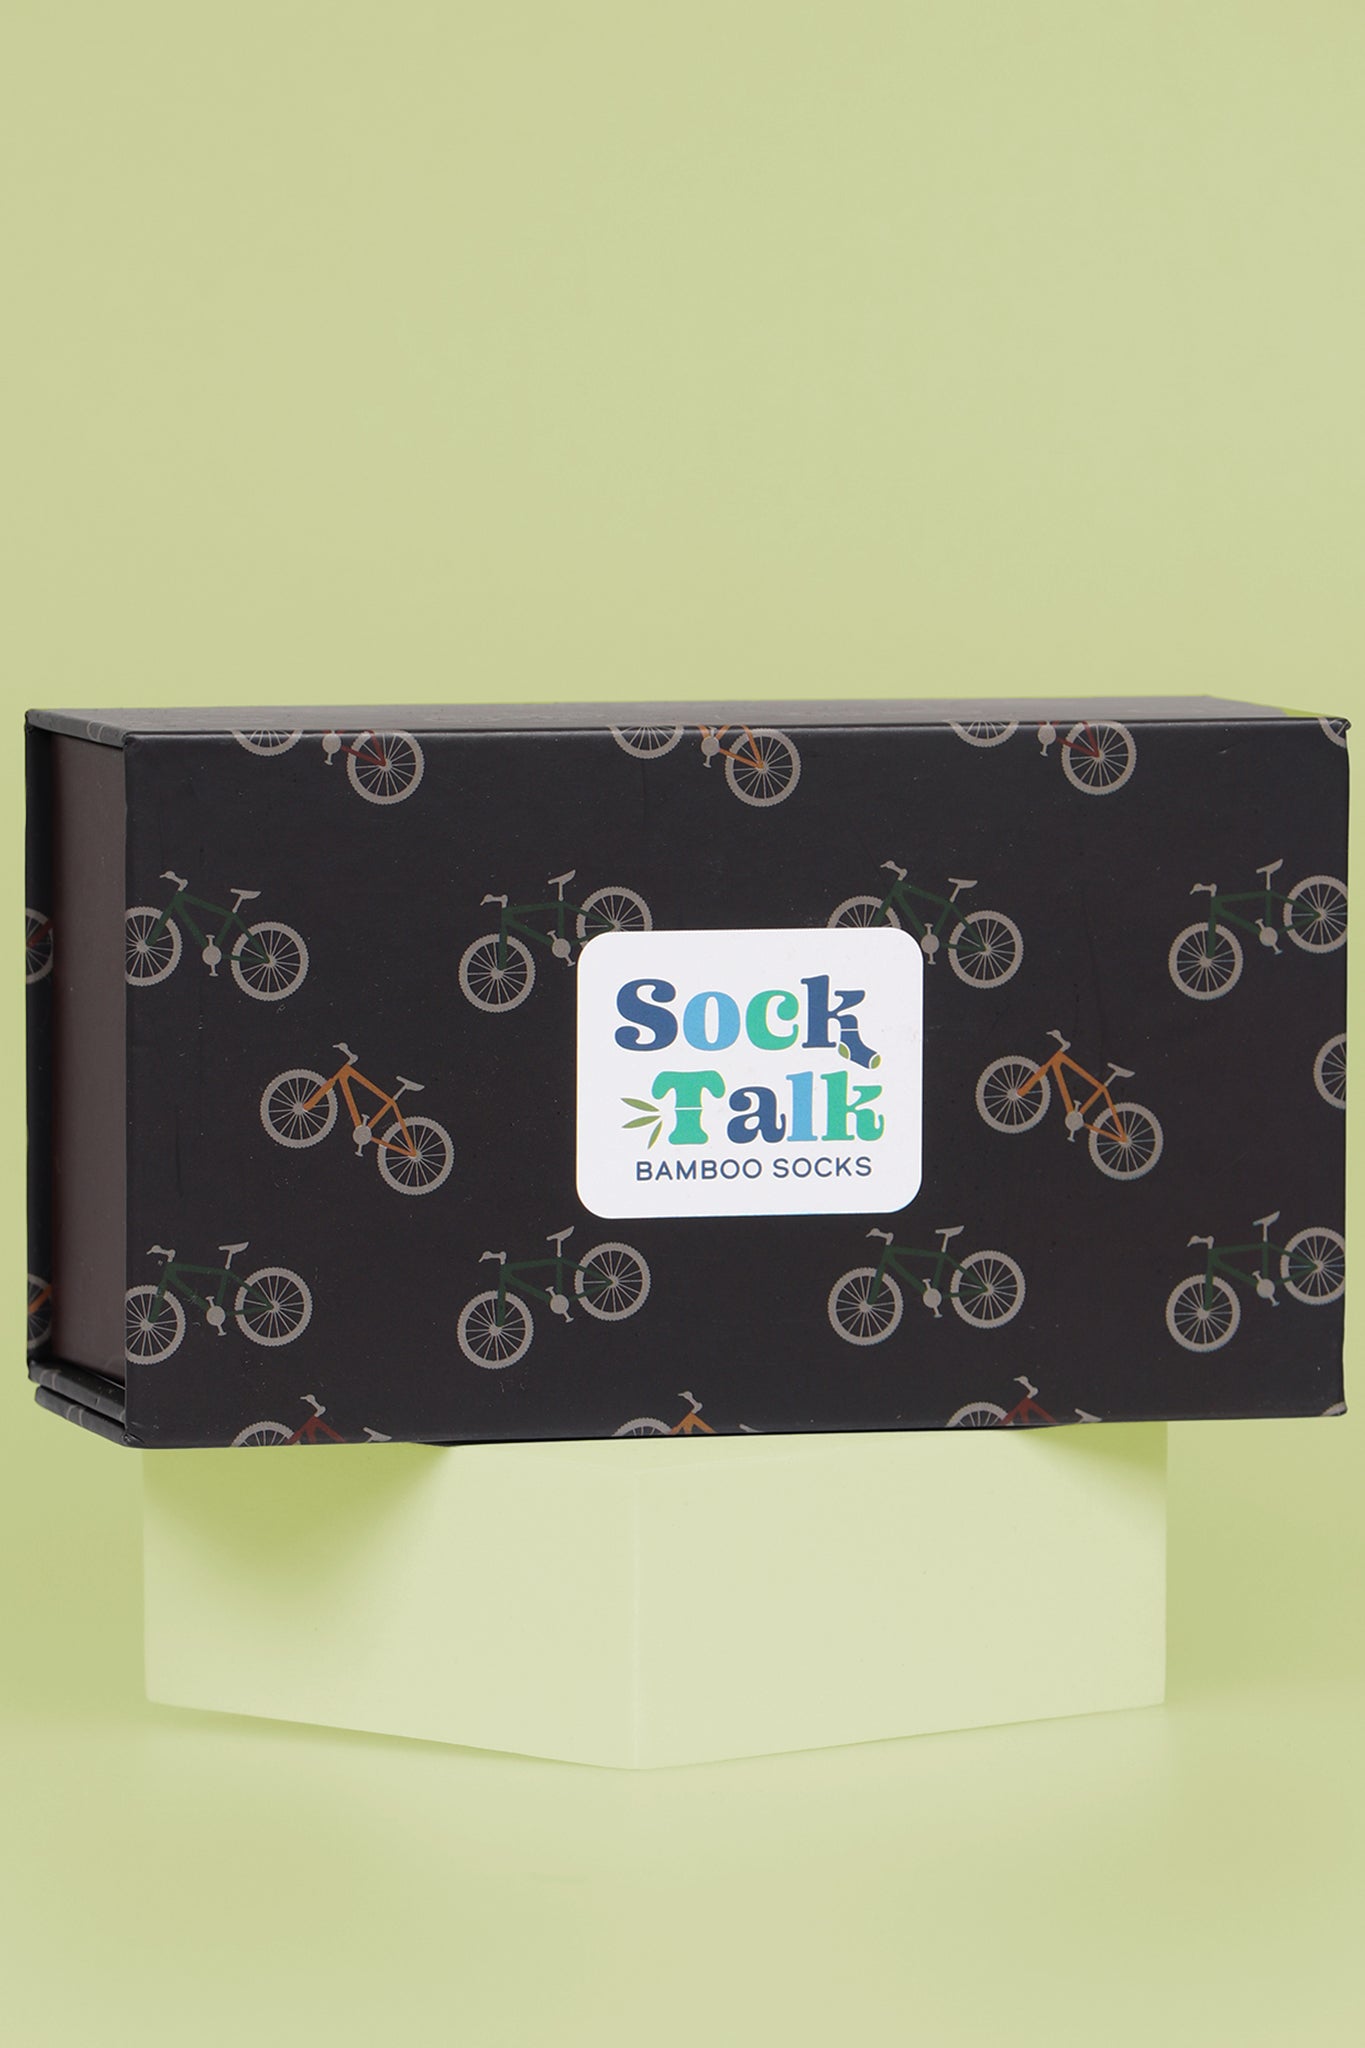 Men's Bamboo Socks Bicycle Print Cycling Novelty Moutain Bike Gift Set Teal